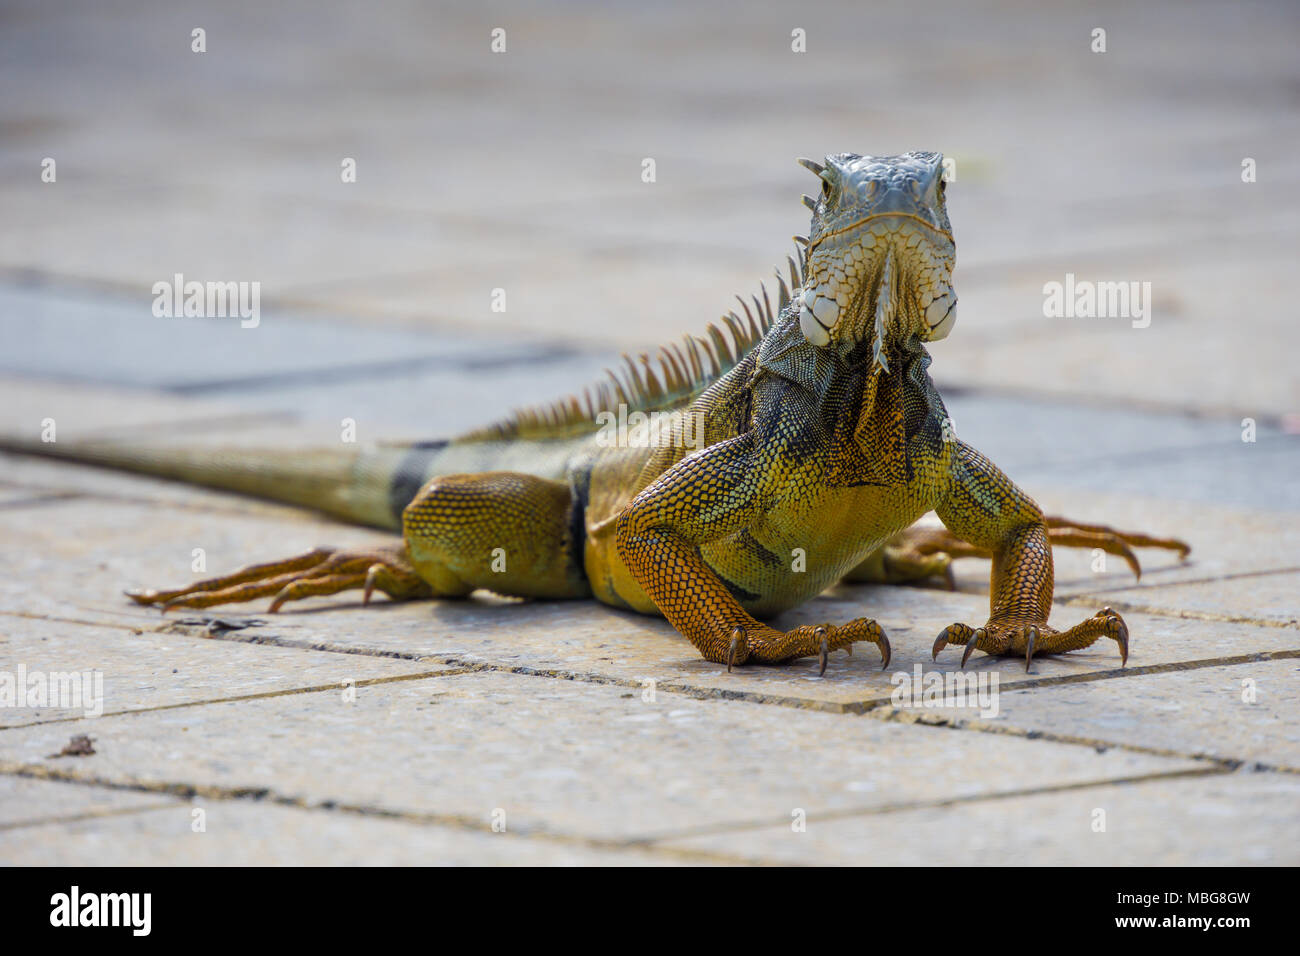 USA, Florida, Huge orange lizard of type Iguana close up frontal view Stock Photo